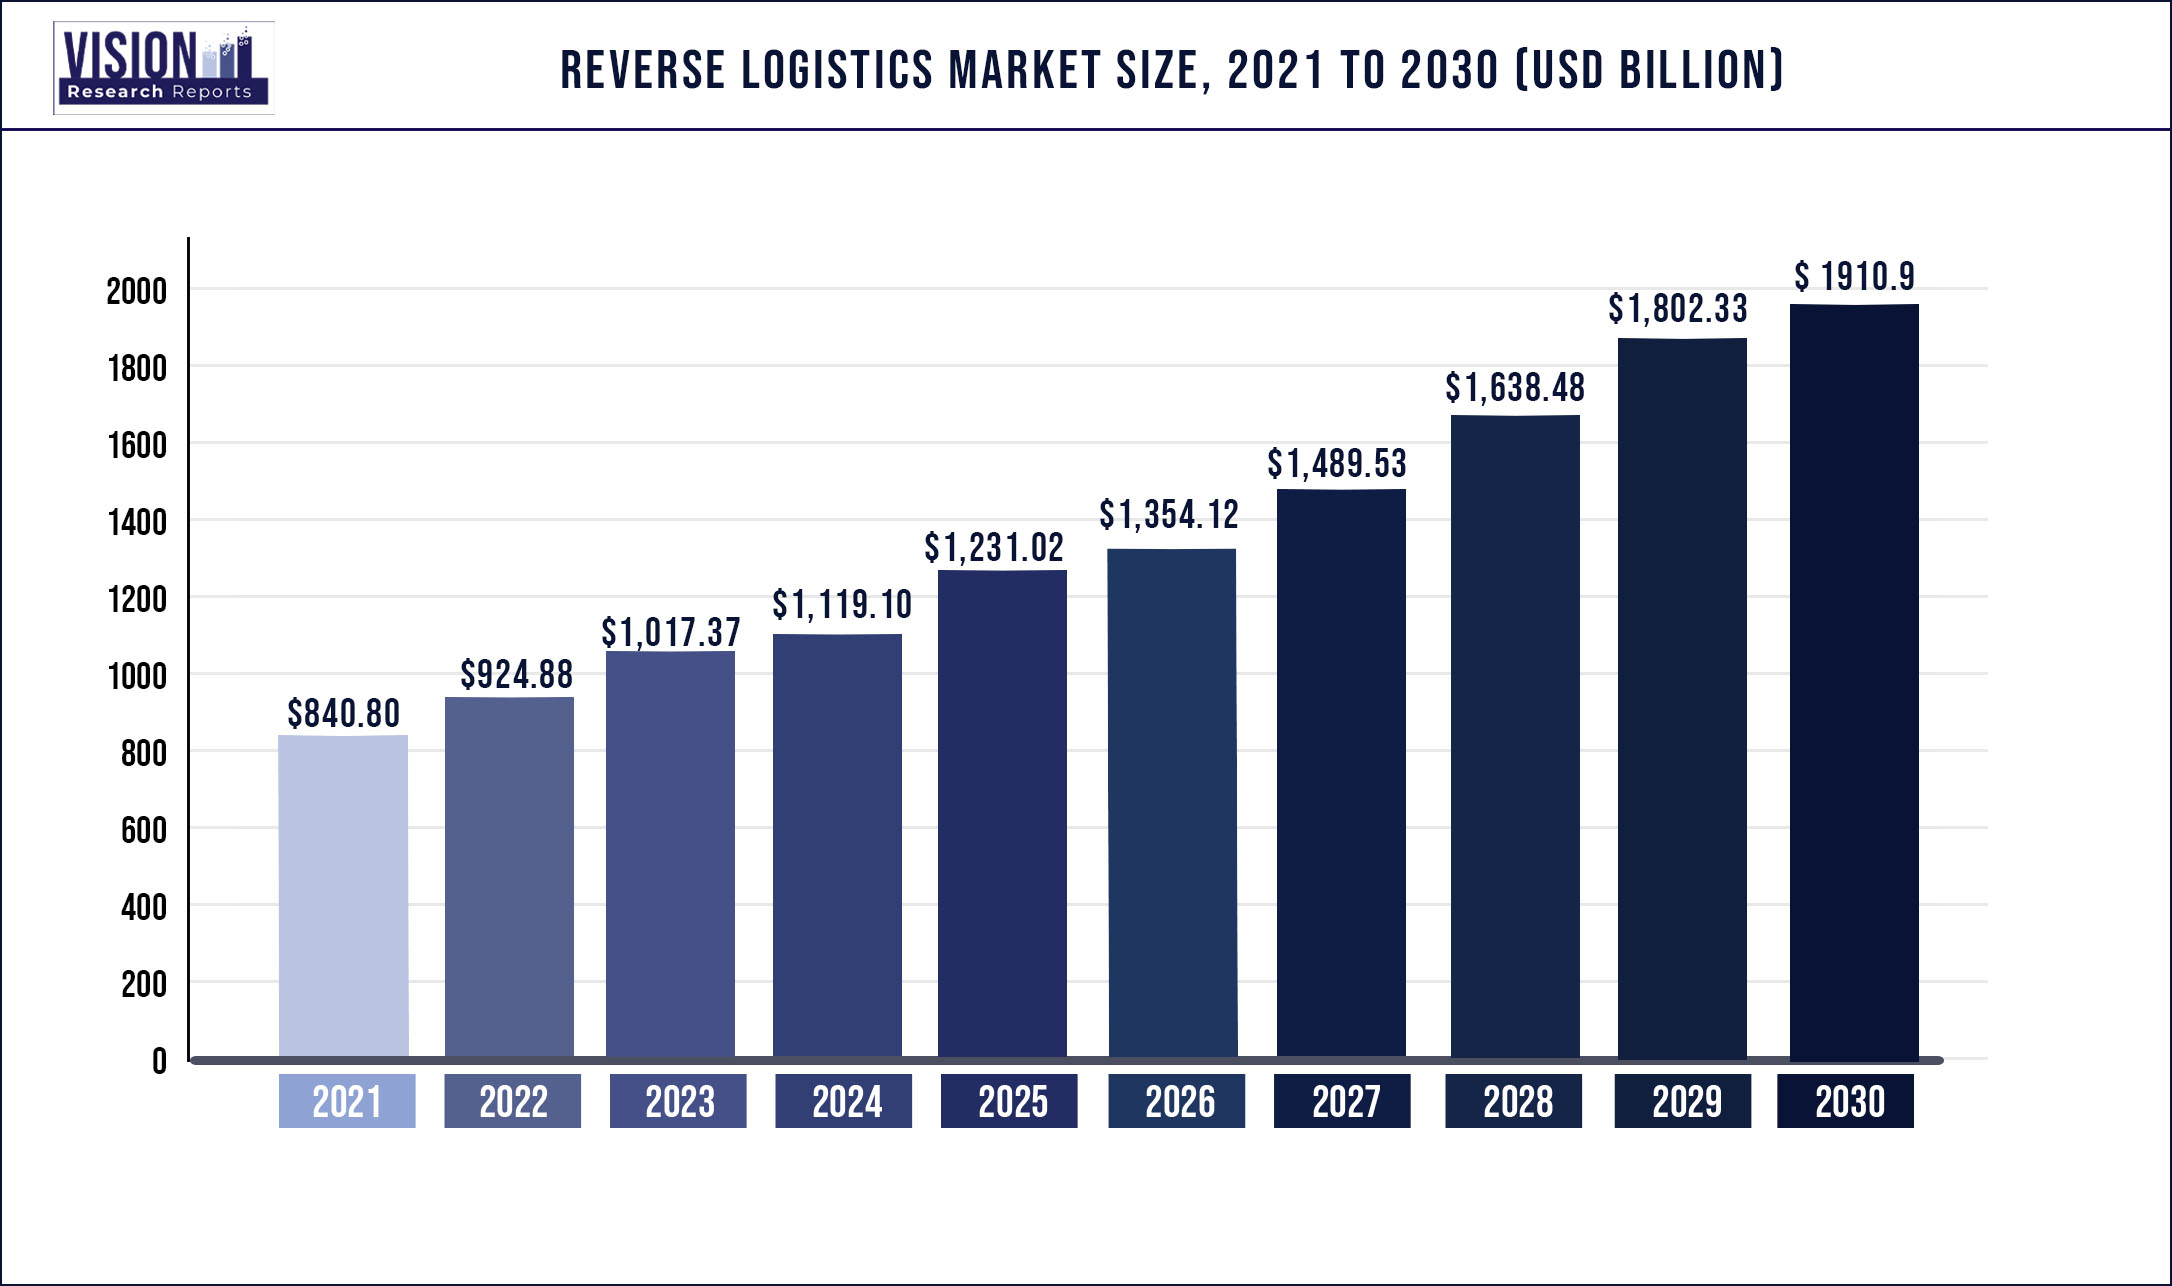 Reverse Logistics Market Size 2021 to 2030